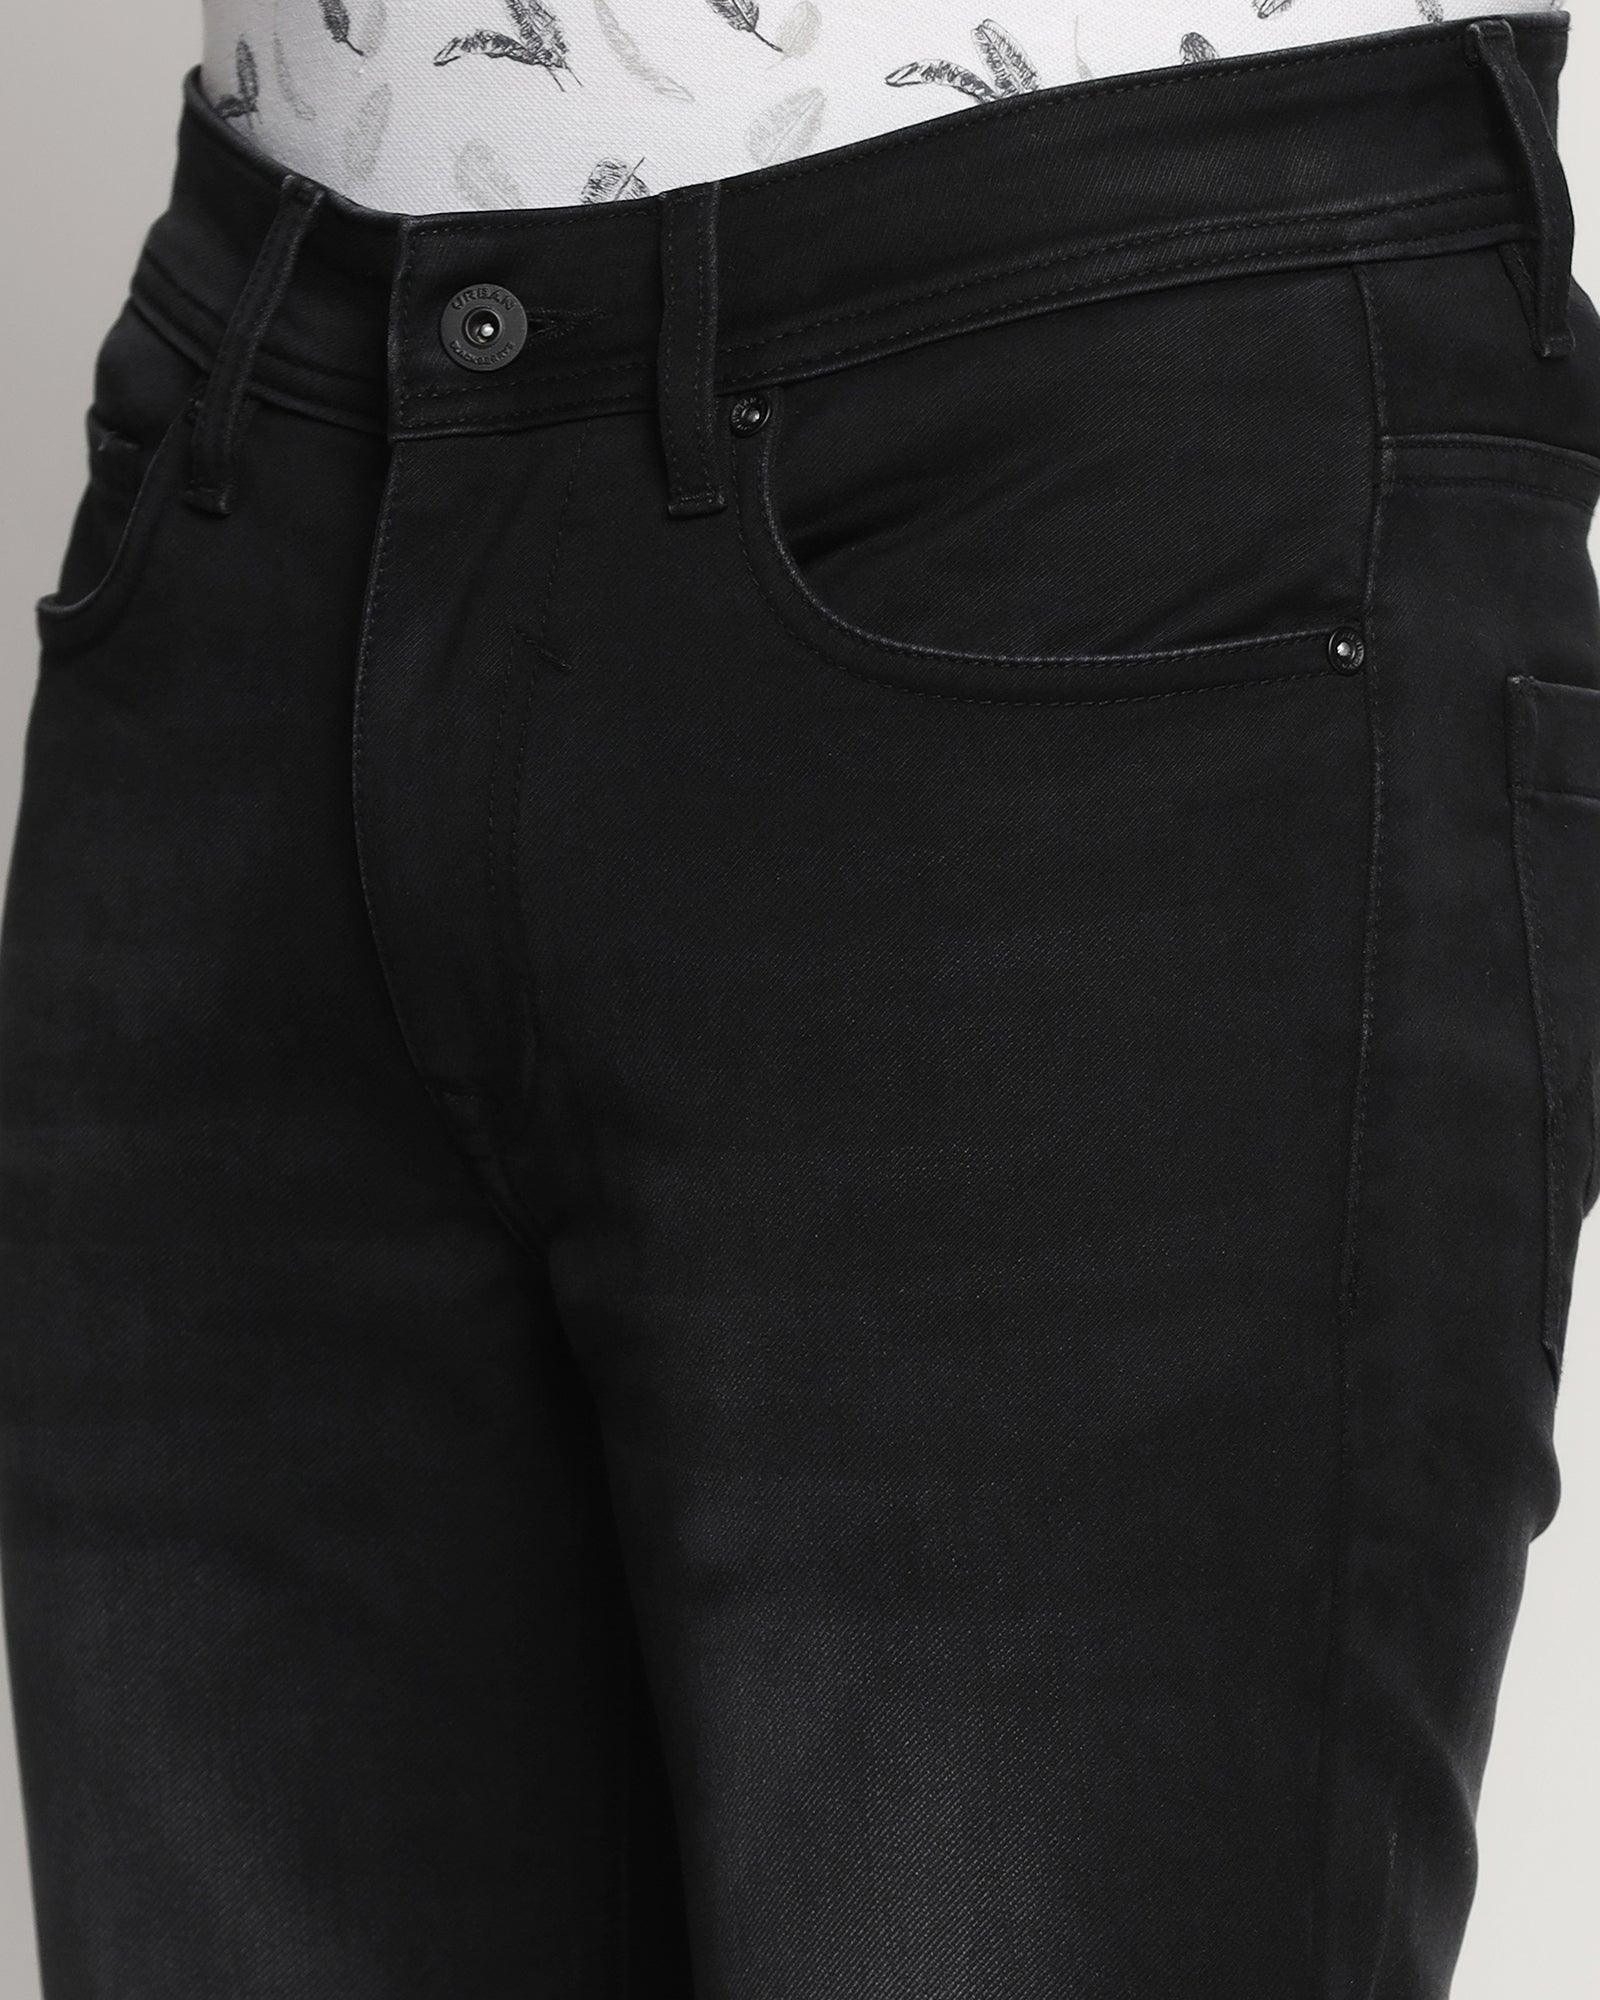 Ultrasoft Slim Comfort Buff Fit Black Jeans - Betsy